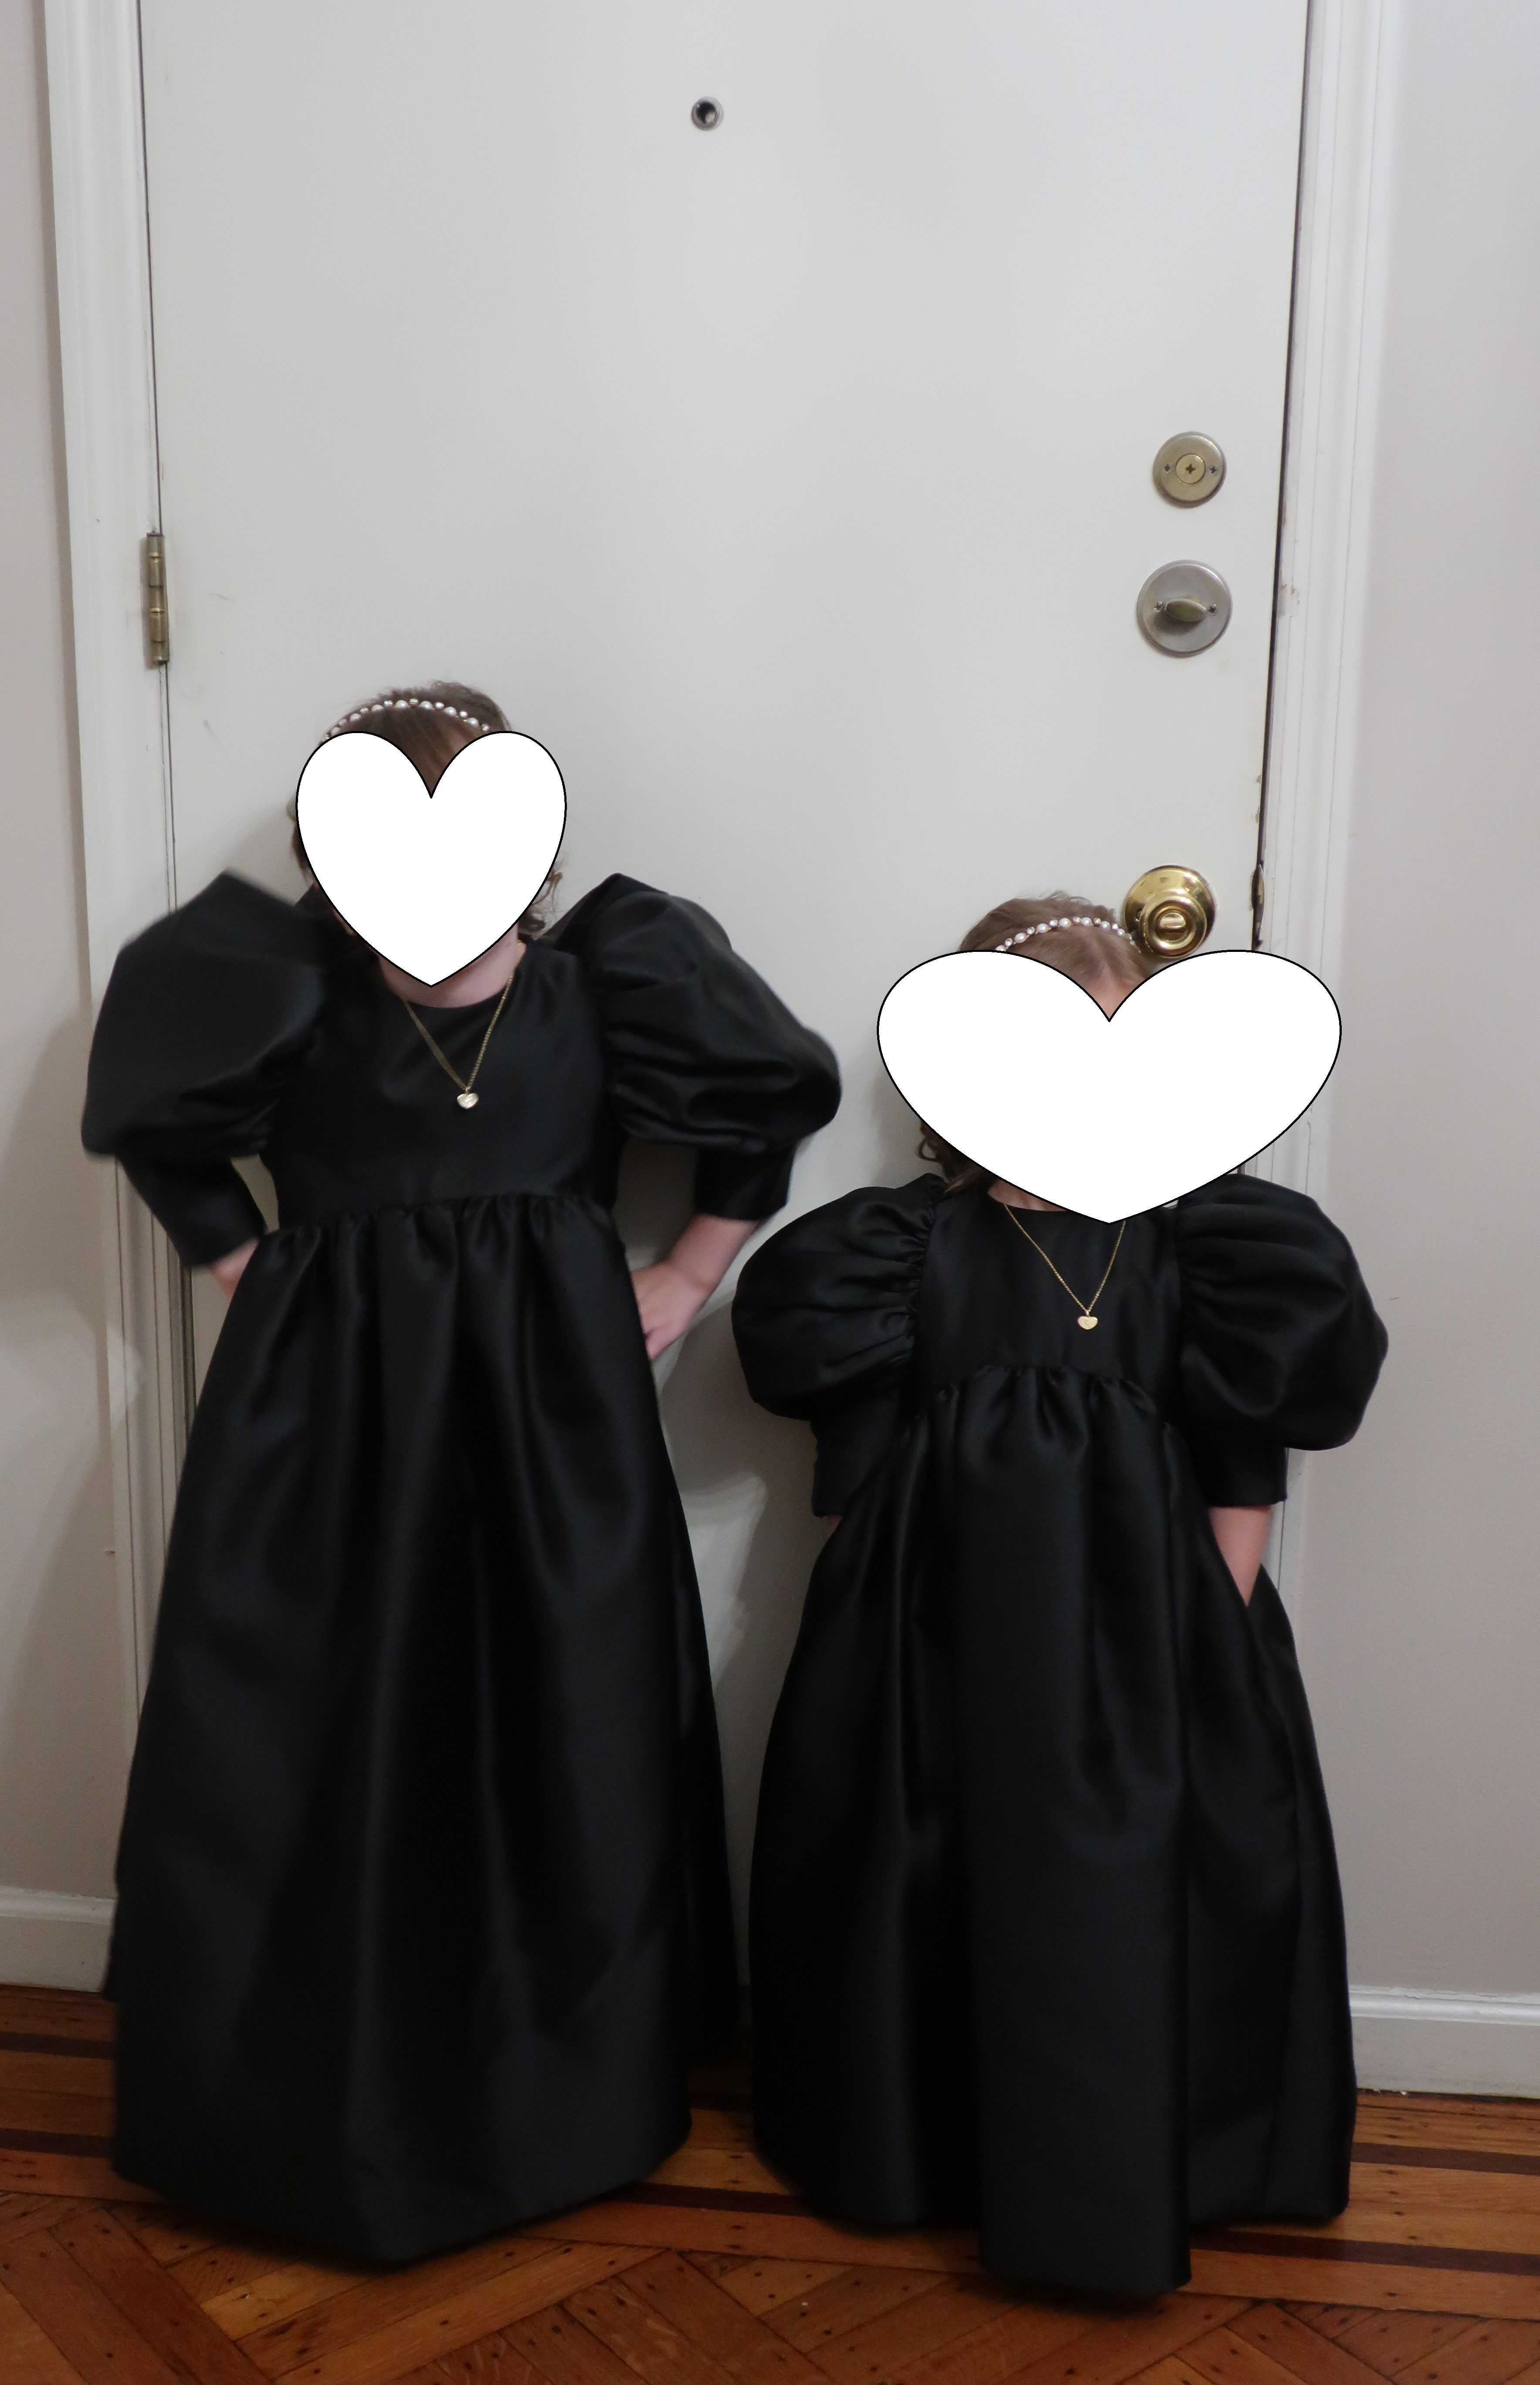 2 Girls Mummymoon black gowns